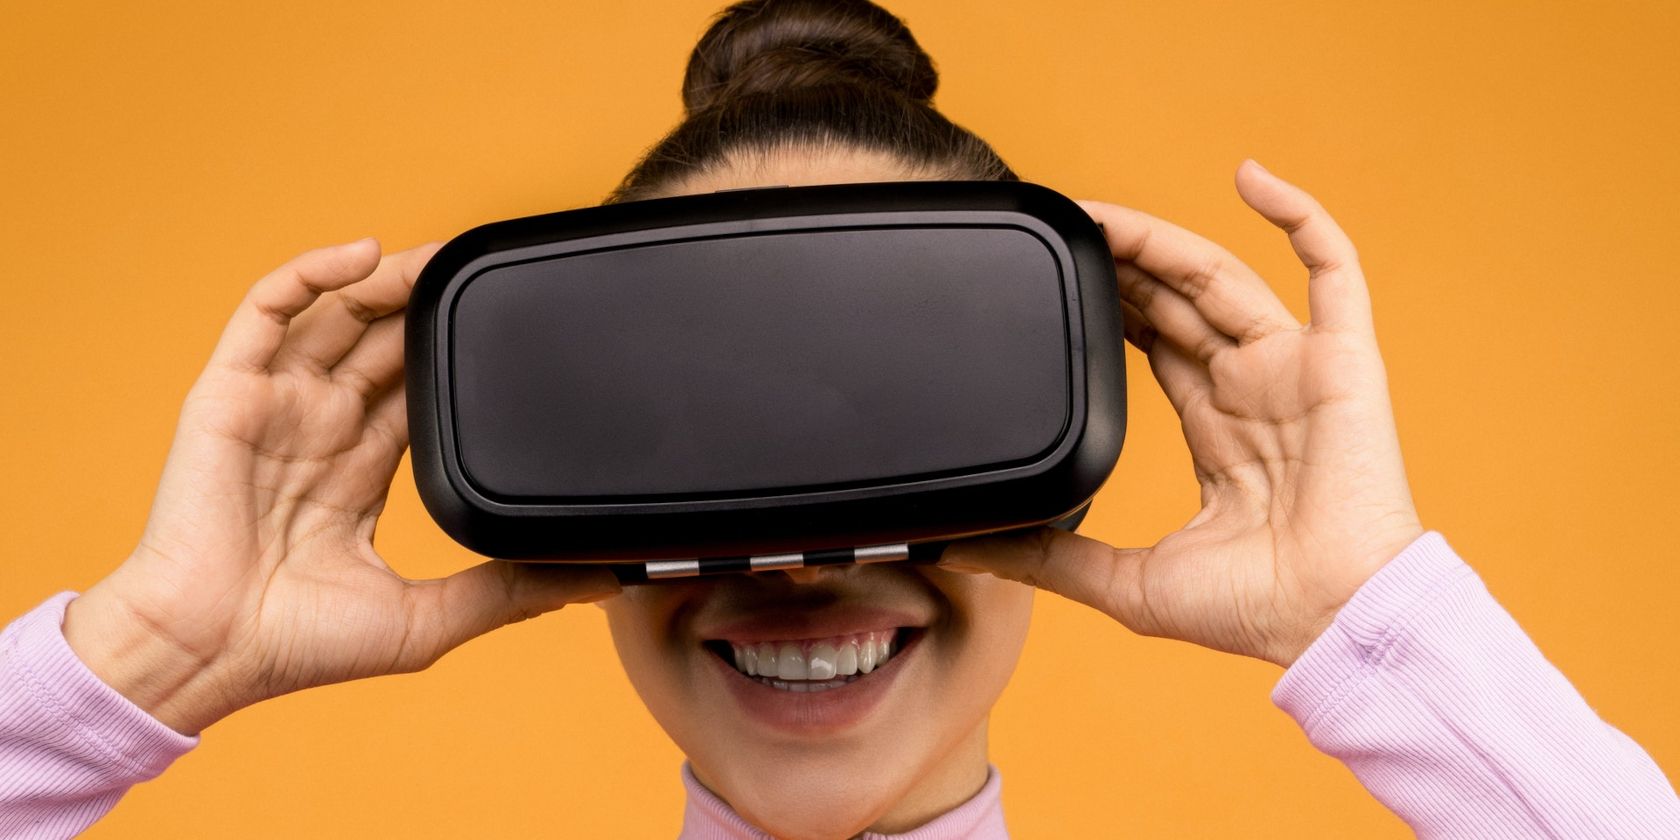 Smiling Woman Wearing VR Headset